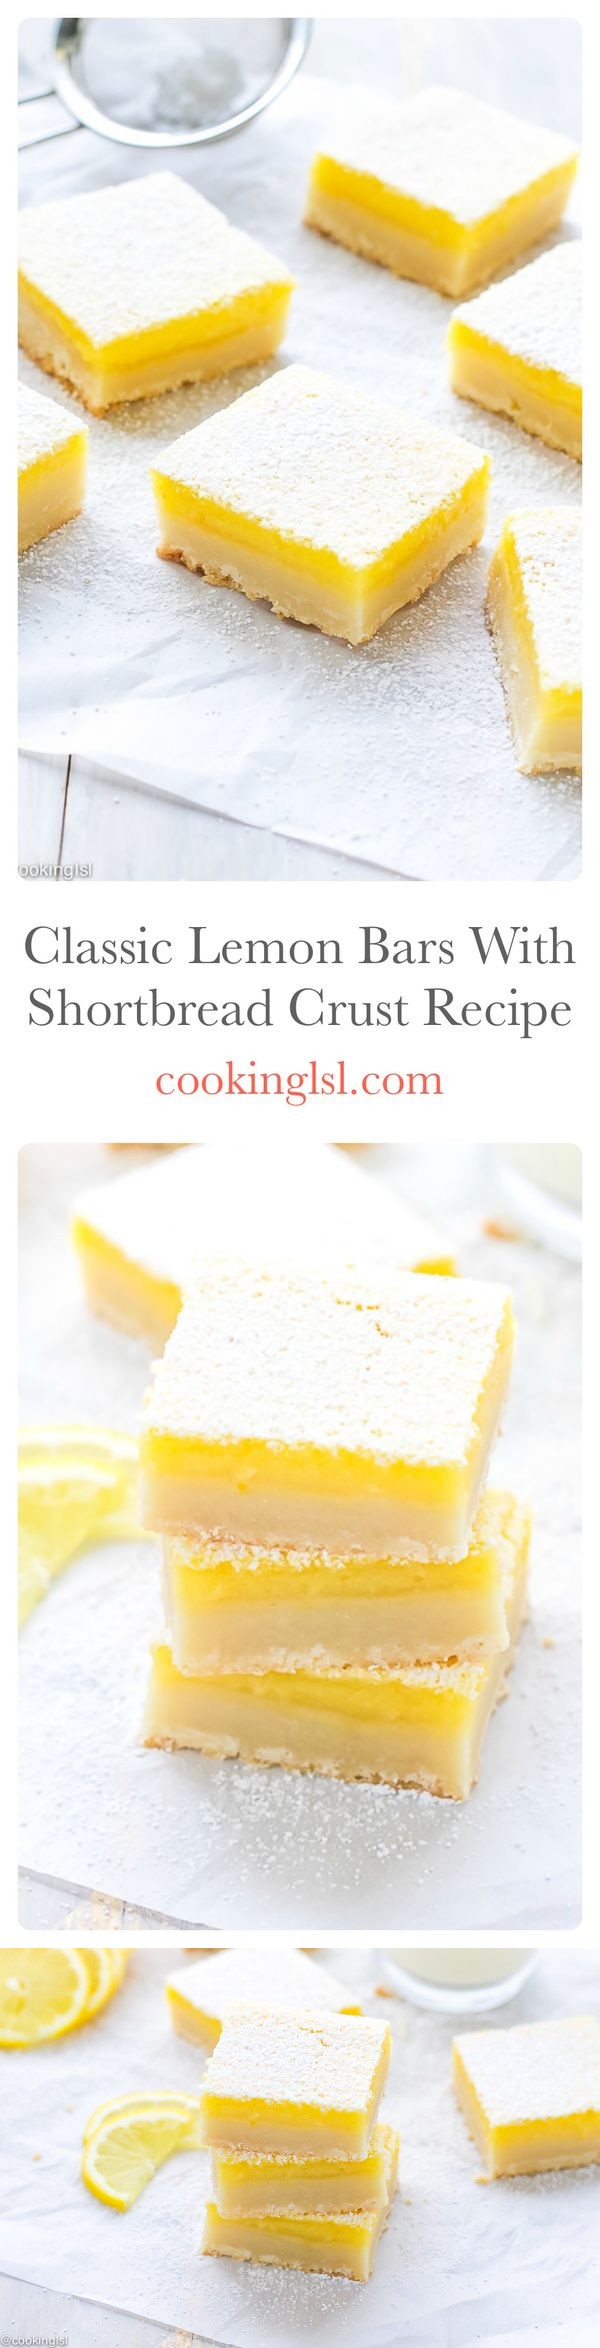 Classic Lemon Bars With Shortbread Crust